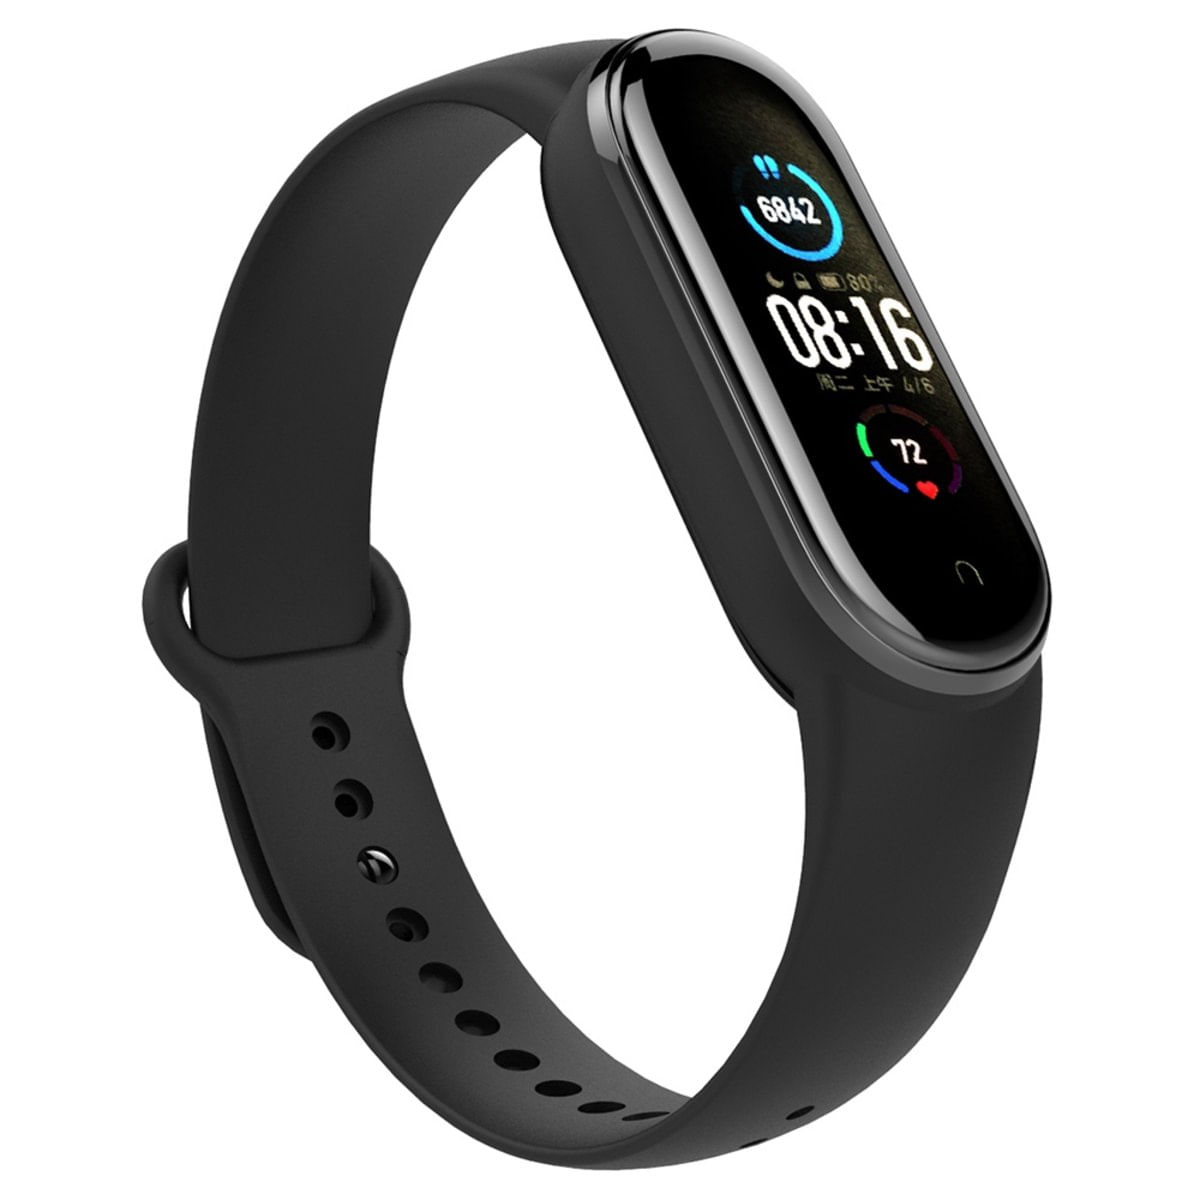 Relógio Smartwatch Xiaomi Smart Band 8 Active M2302B1- Preto